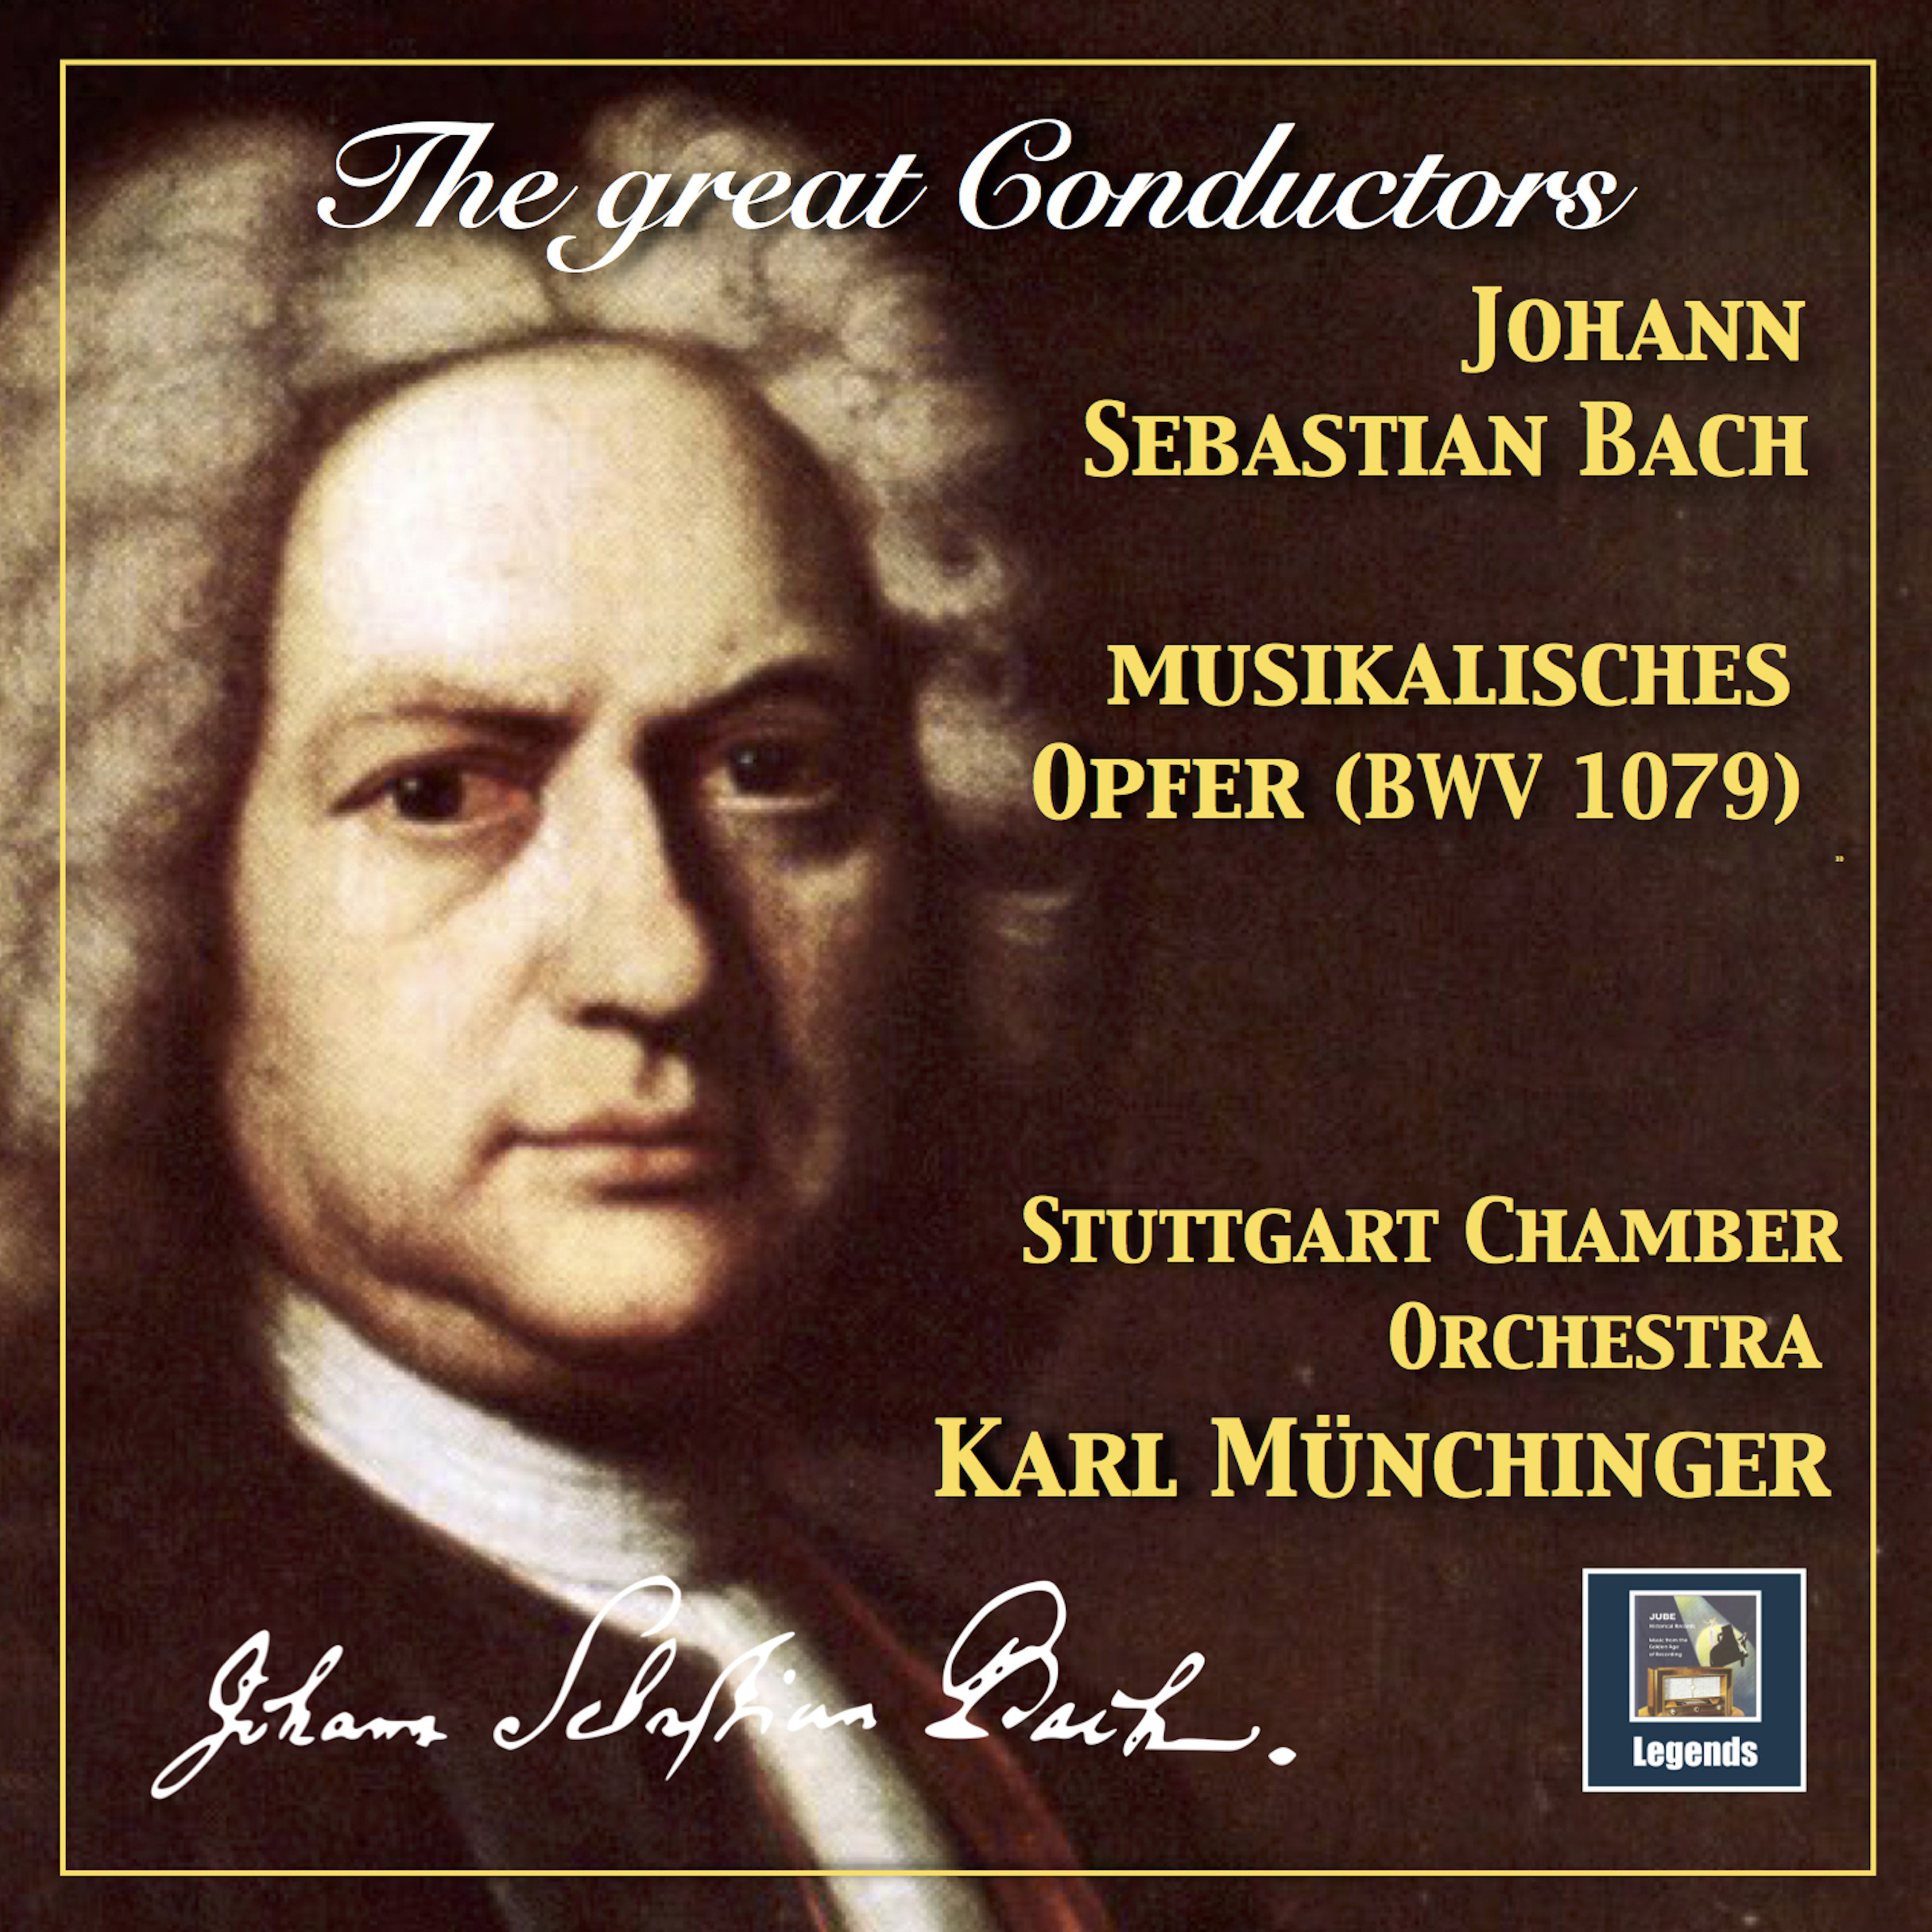 Musikalisches Opfer, BWV 1079 Arr. K. Mü nchinger for Chamber Orchestra: Sonata a 3, Allegro 1